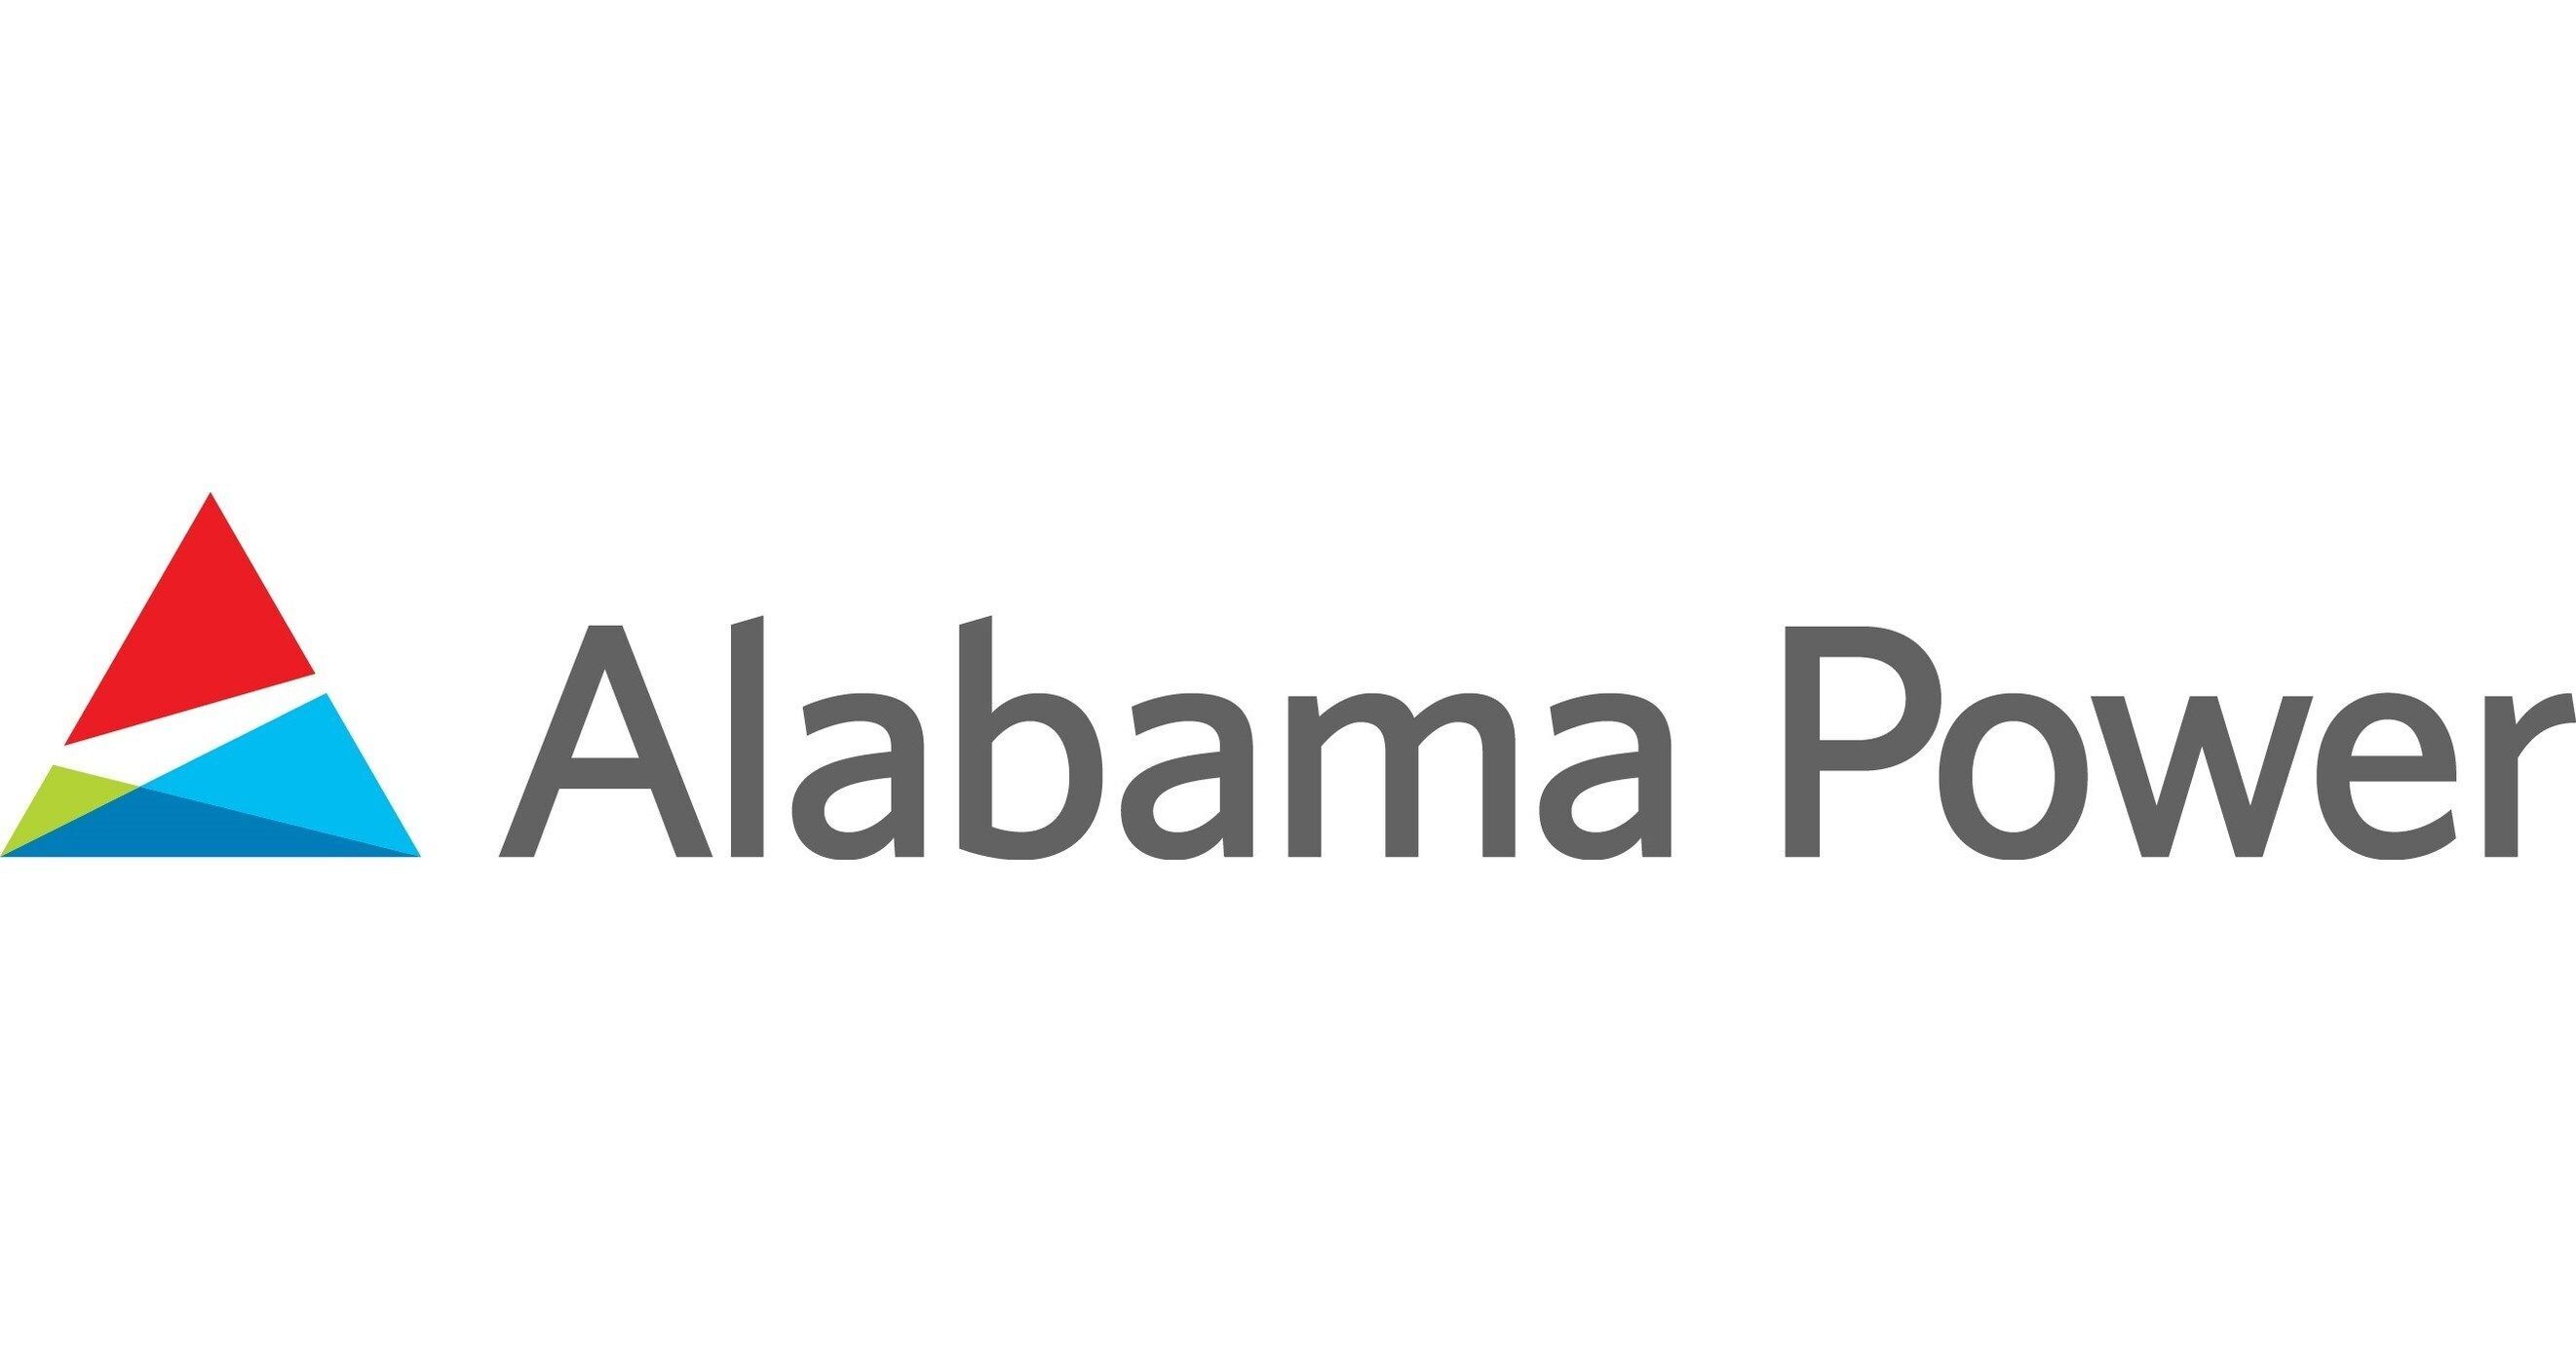 Alabama Power